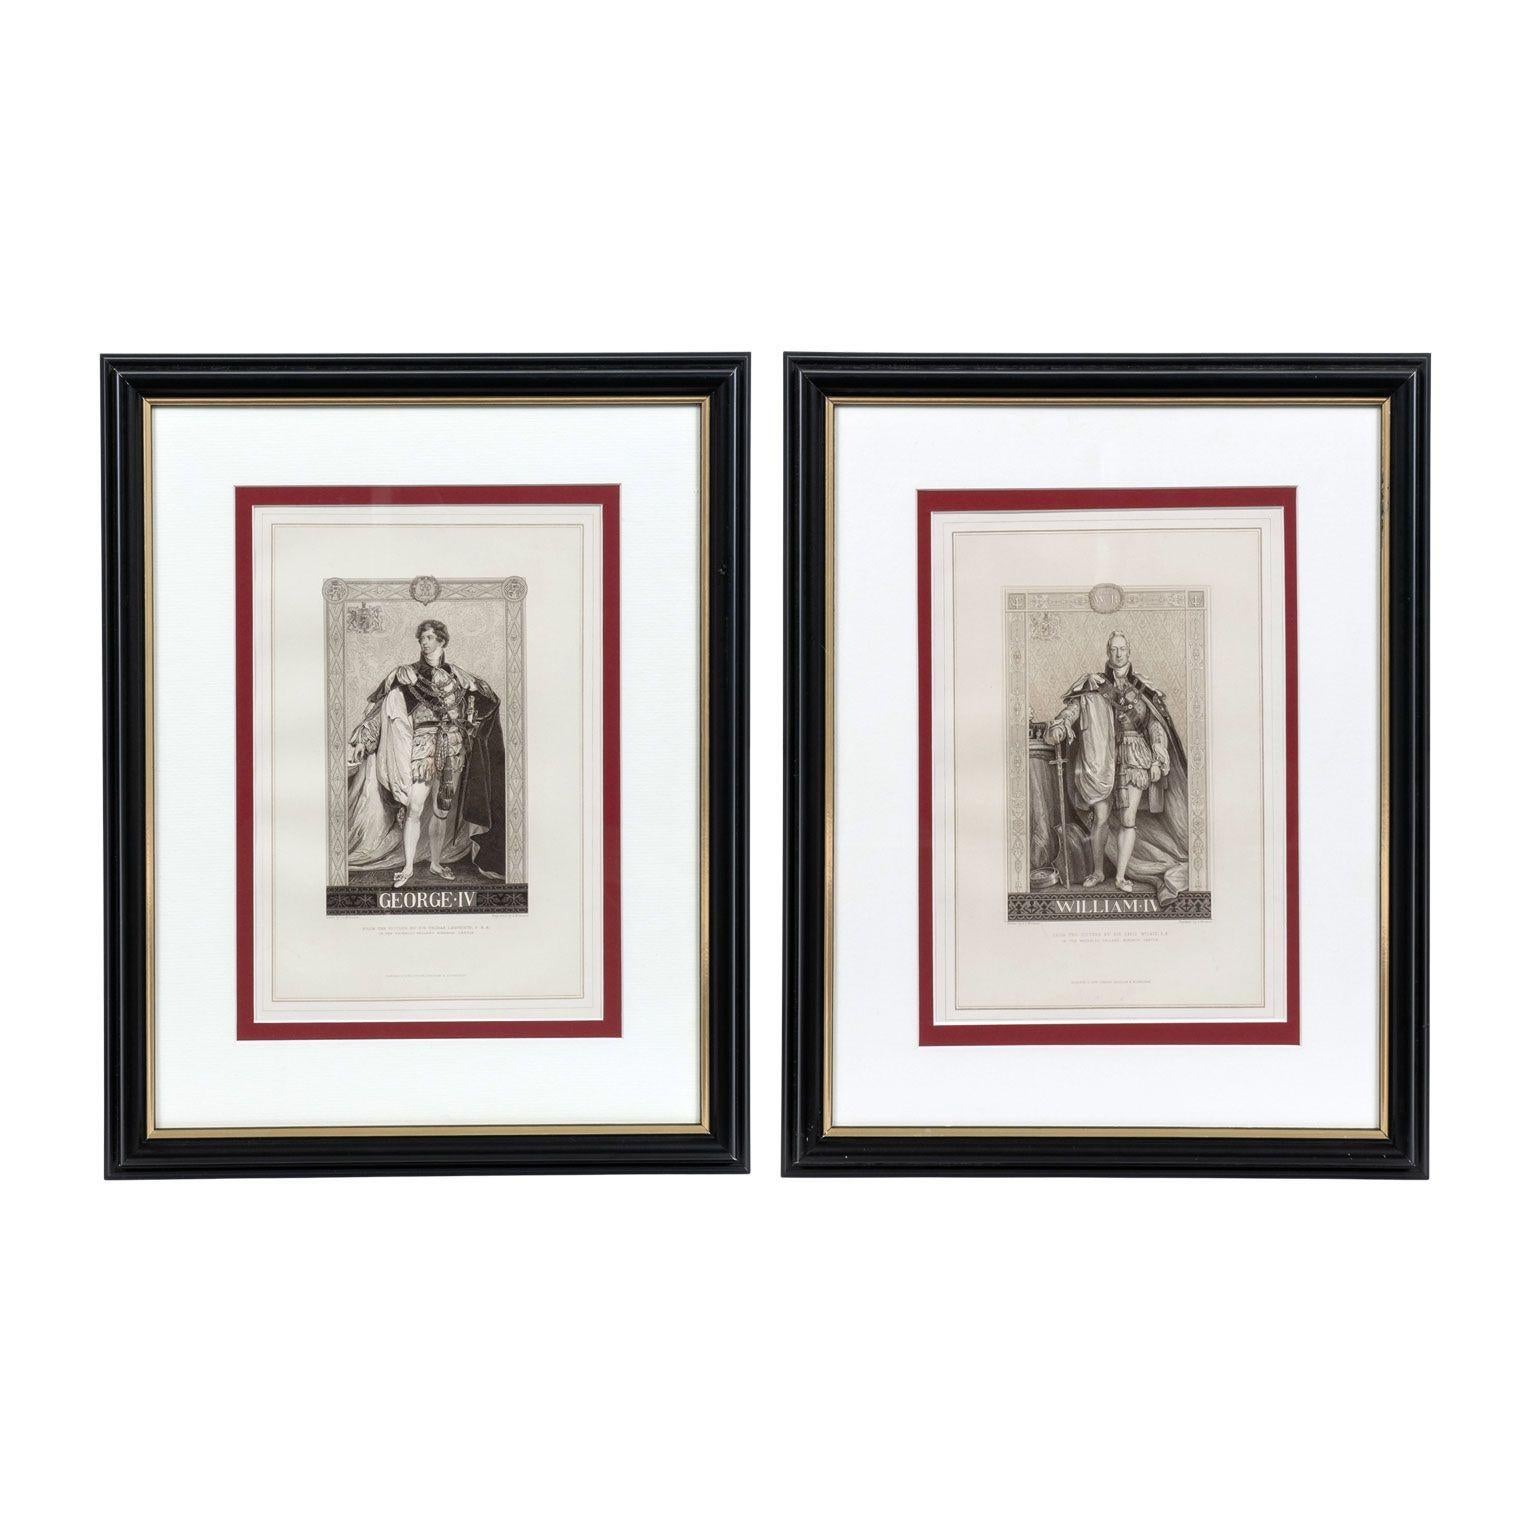 Twenty Framed Steel Engravings of English Monarchs For Sale 4